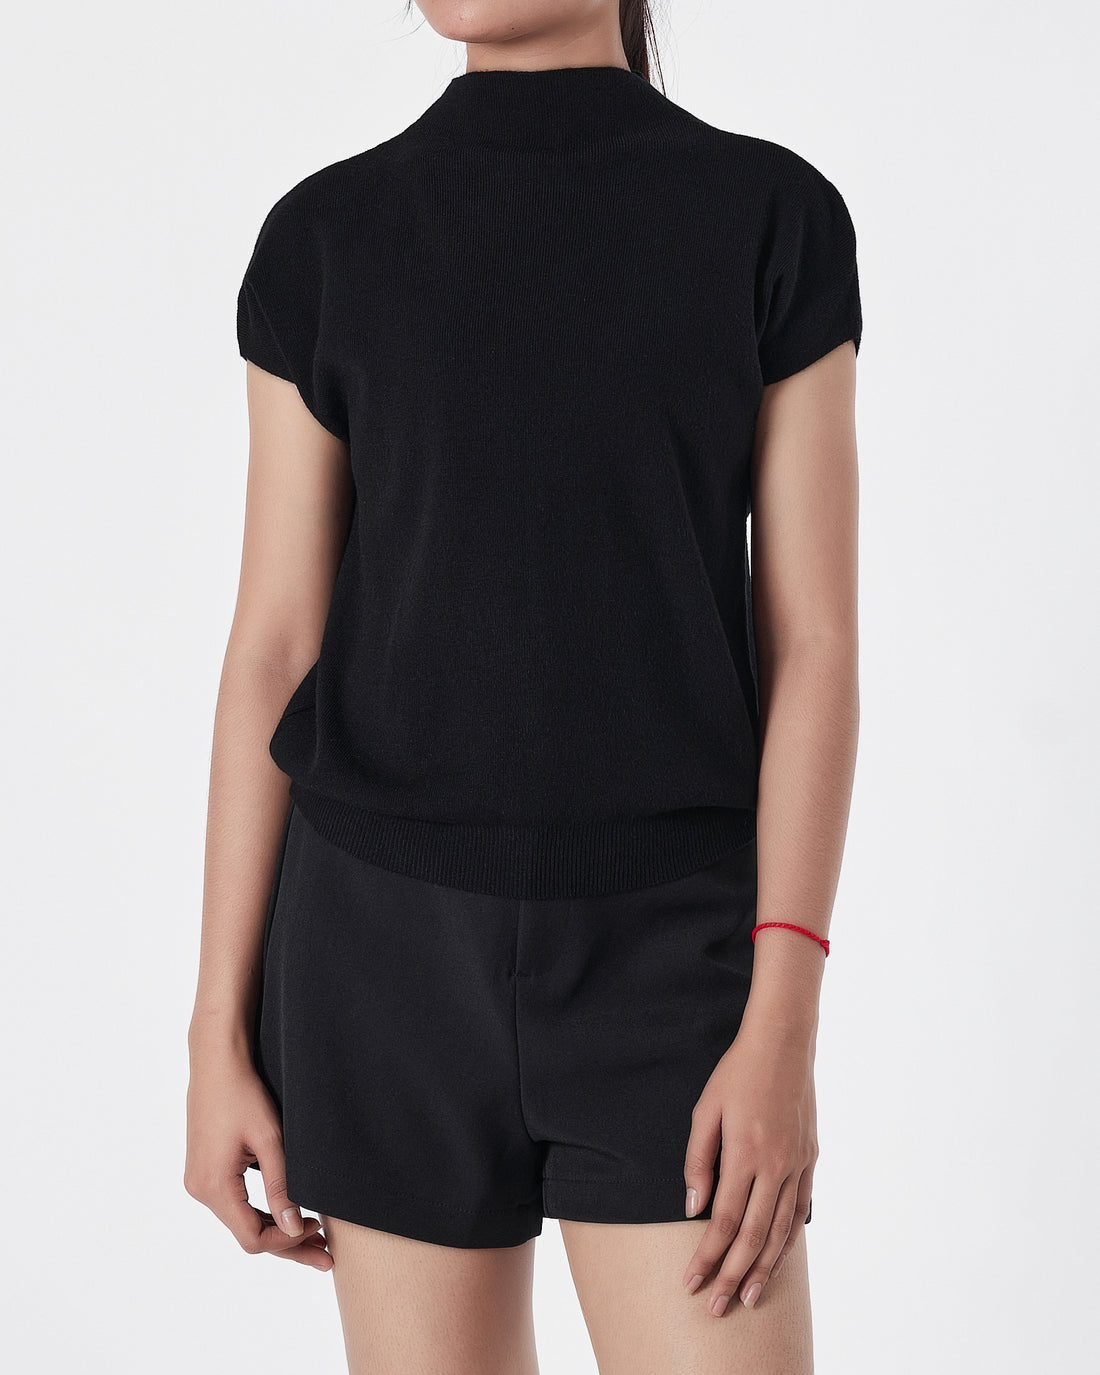 Cozy Soft Knit Lady Black T-Shirt 14.90